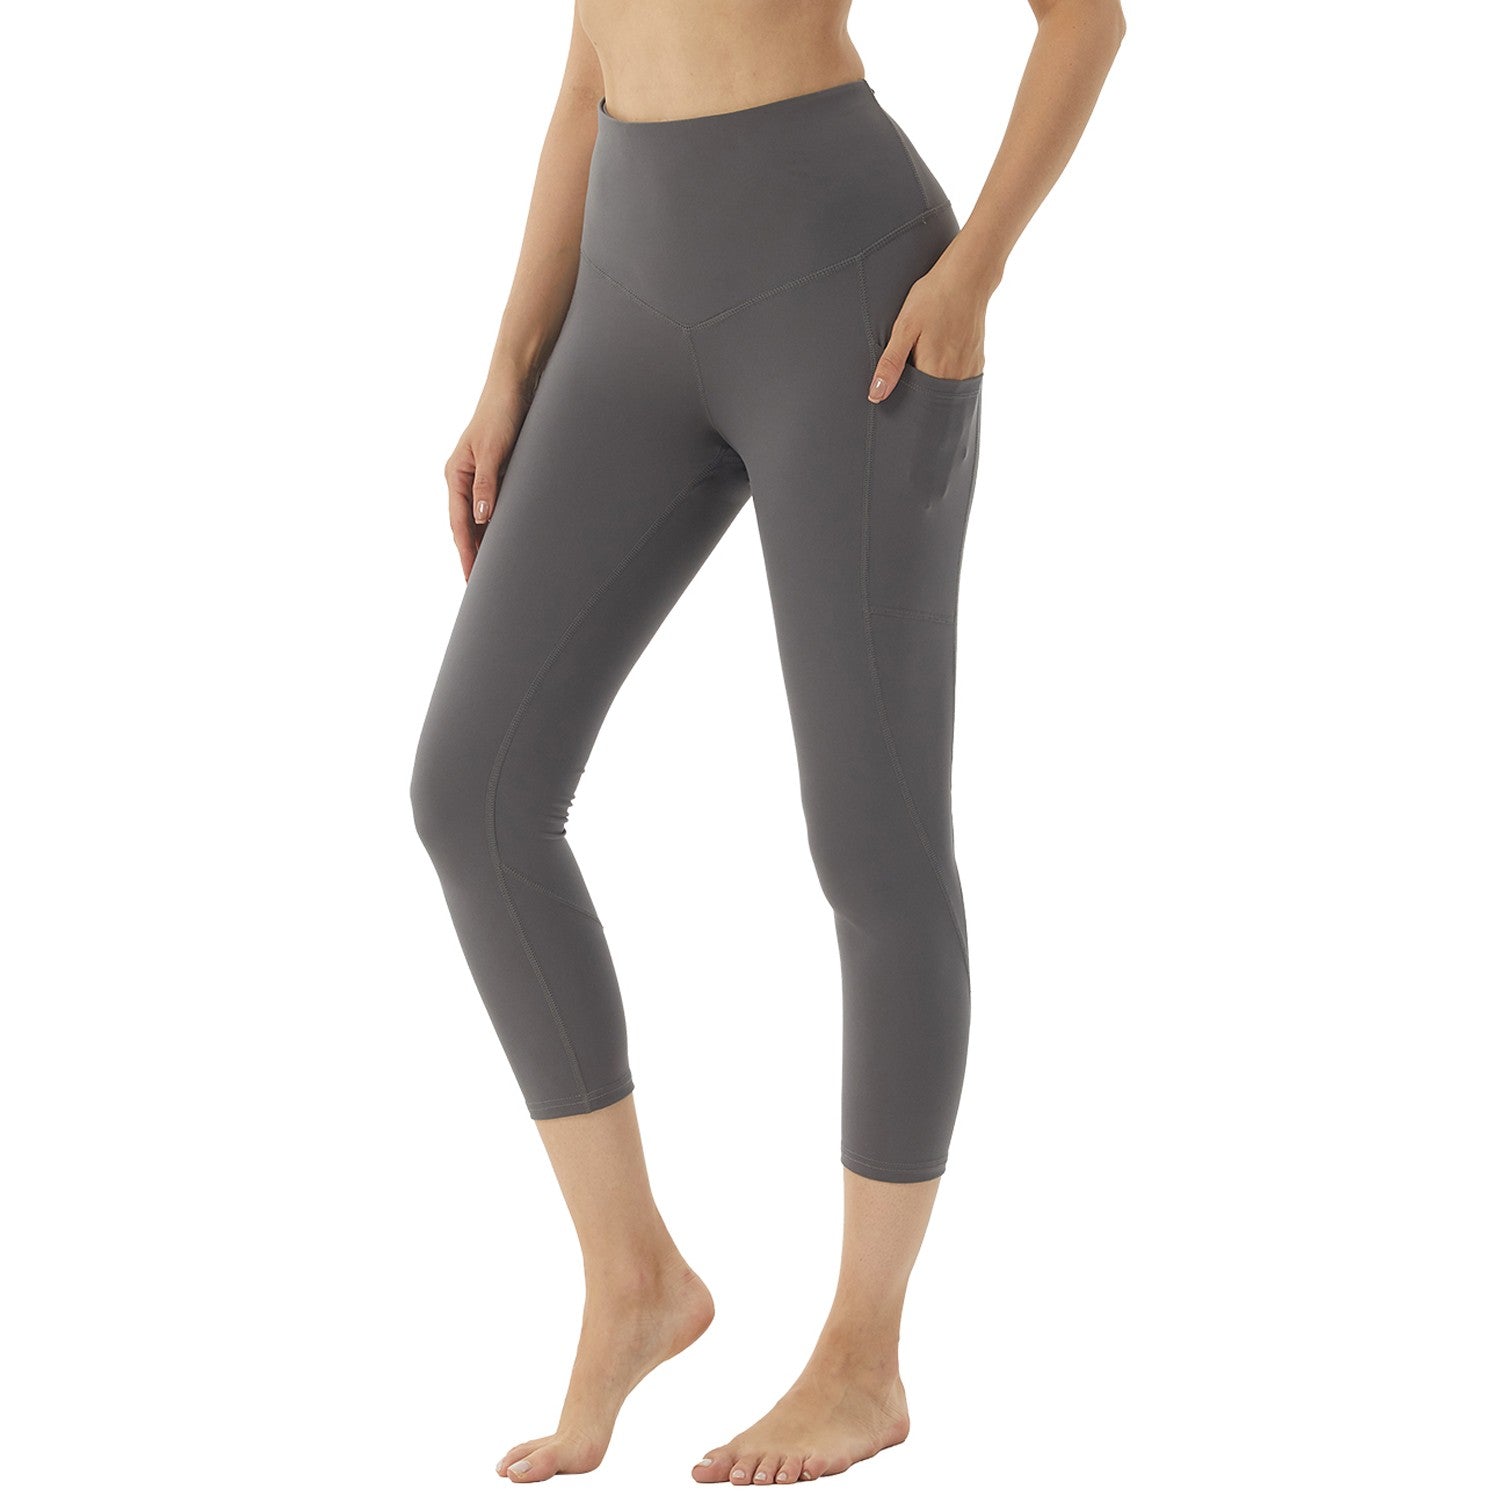 OUYISHANG Women's Shiny 7/8 Yoga Pants with Pockets High Waisted Workout  Running Capri Leggings L 